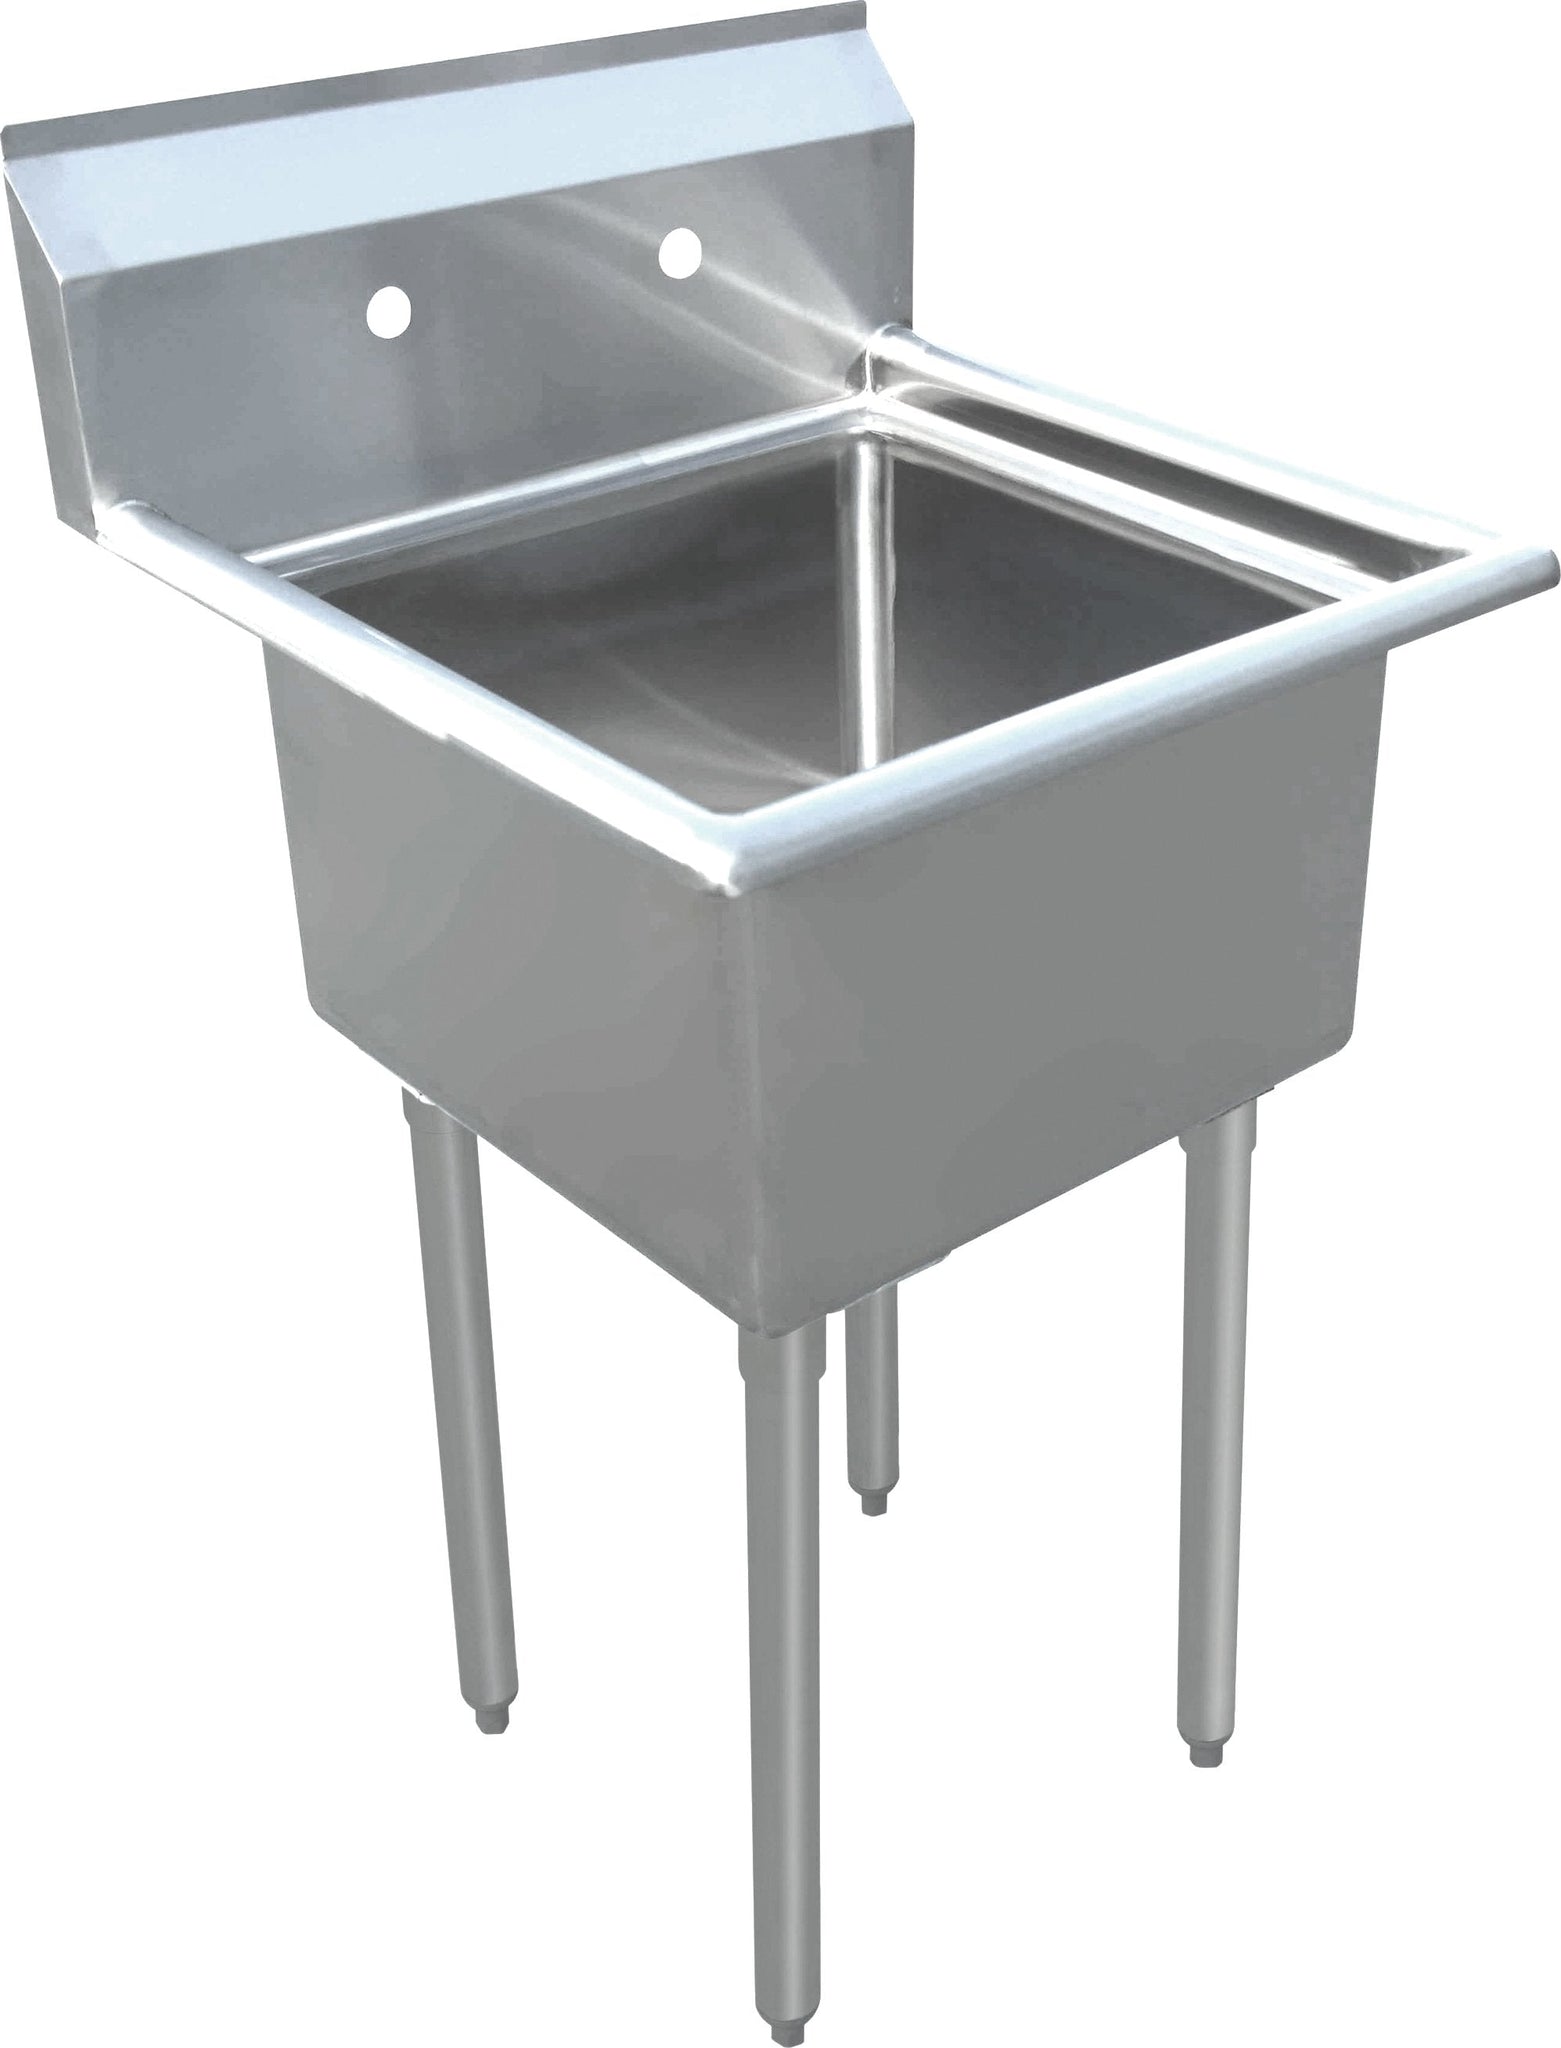 Omcan - No Drain Board 18” x 18” x 11” Pot Sink with Center Drain - 43761